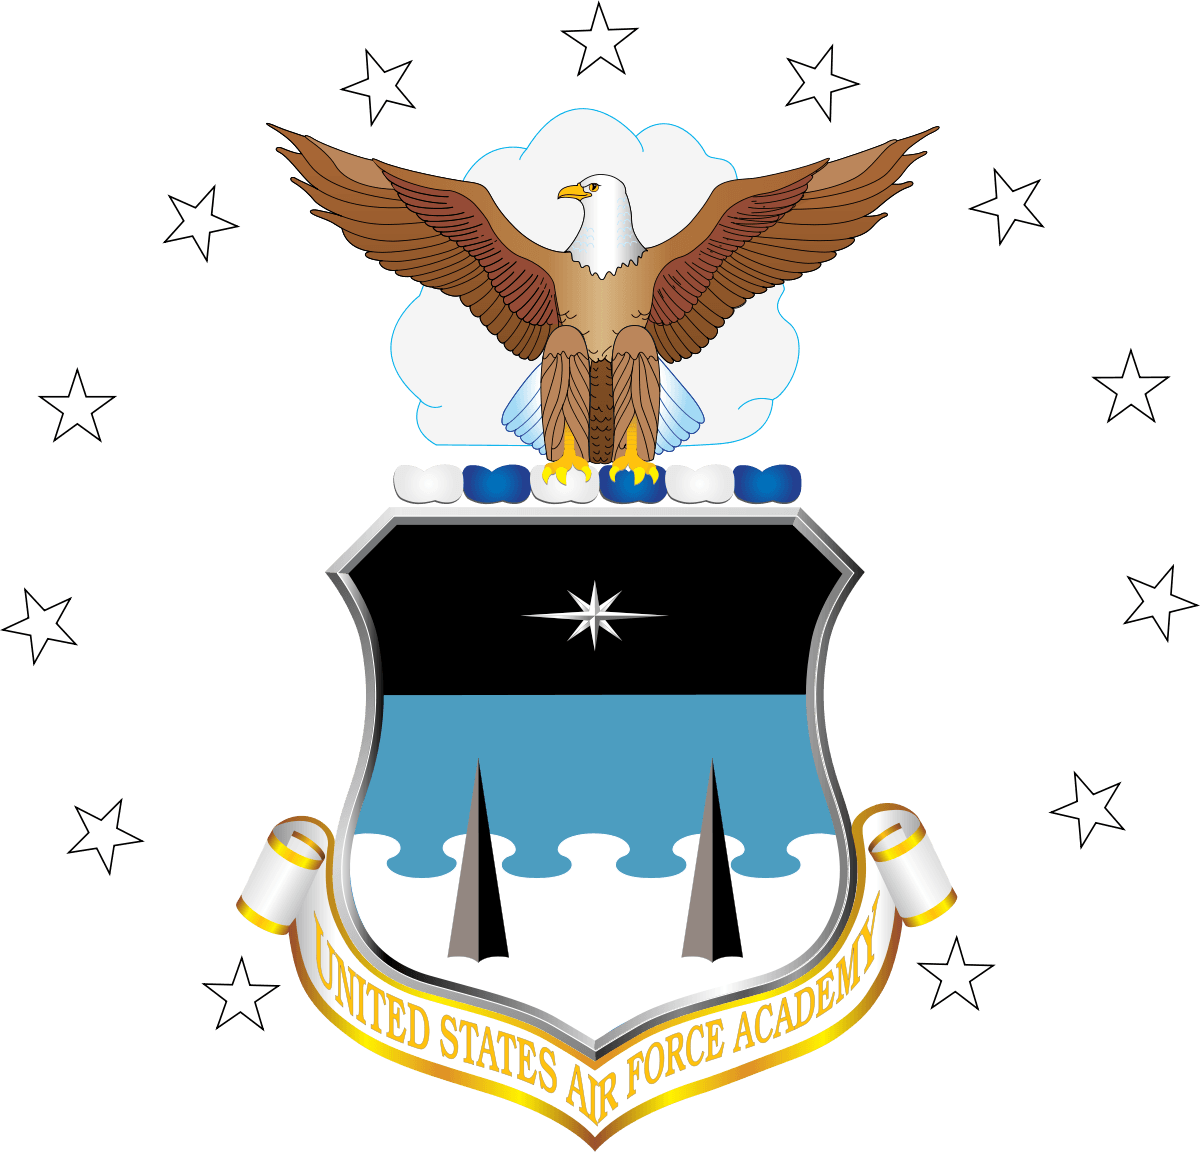 USAFA Logo - United States Air Force Academy